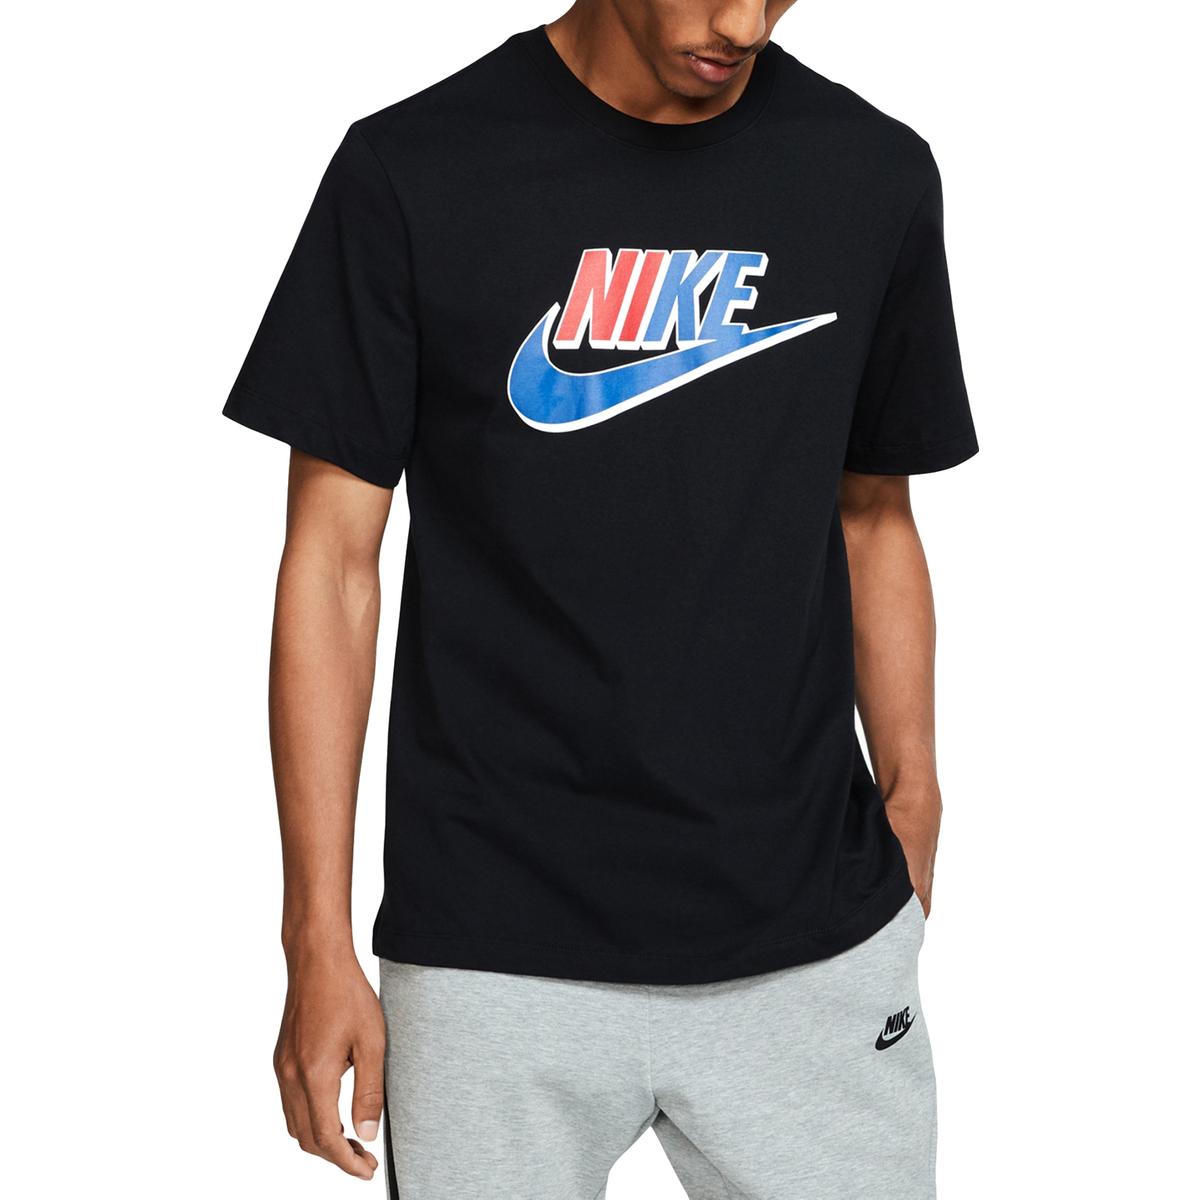 Nike Mens Black Cotton Logo Tee T-Shirt Athletic S BHFO 6428 ...